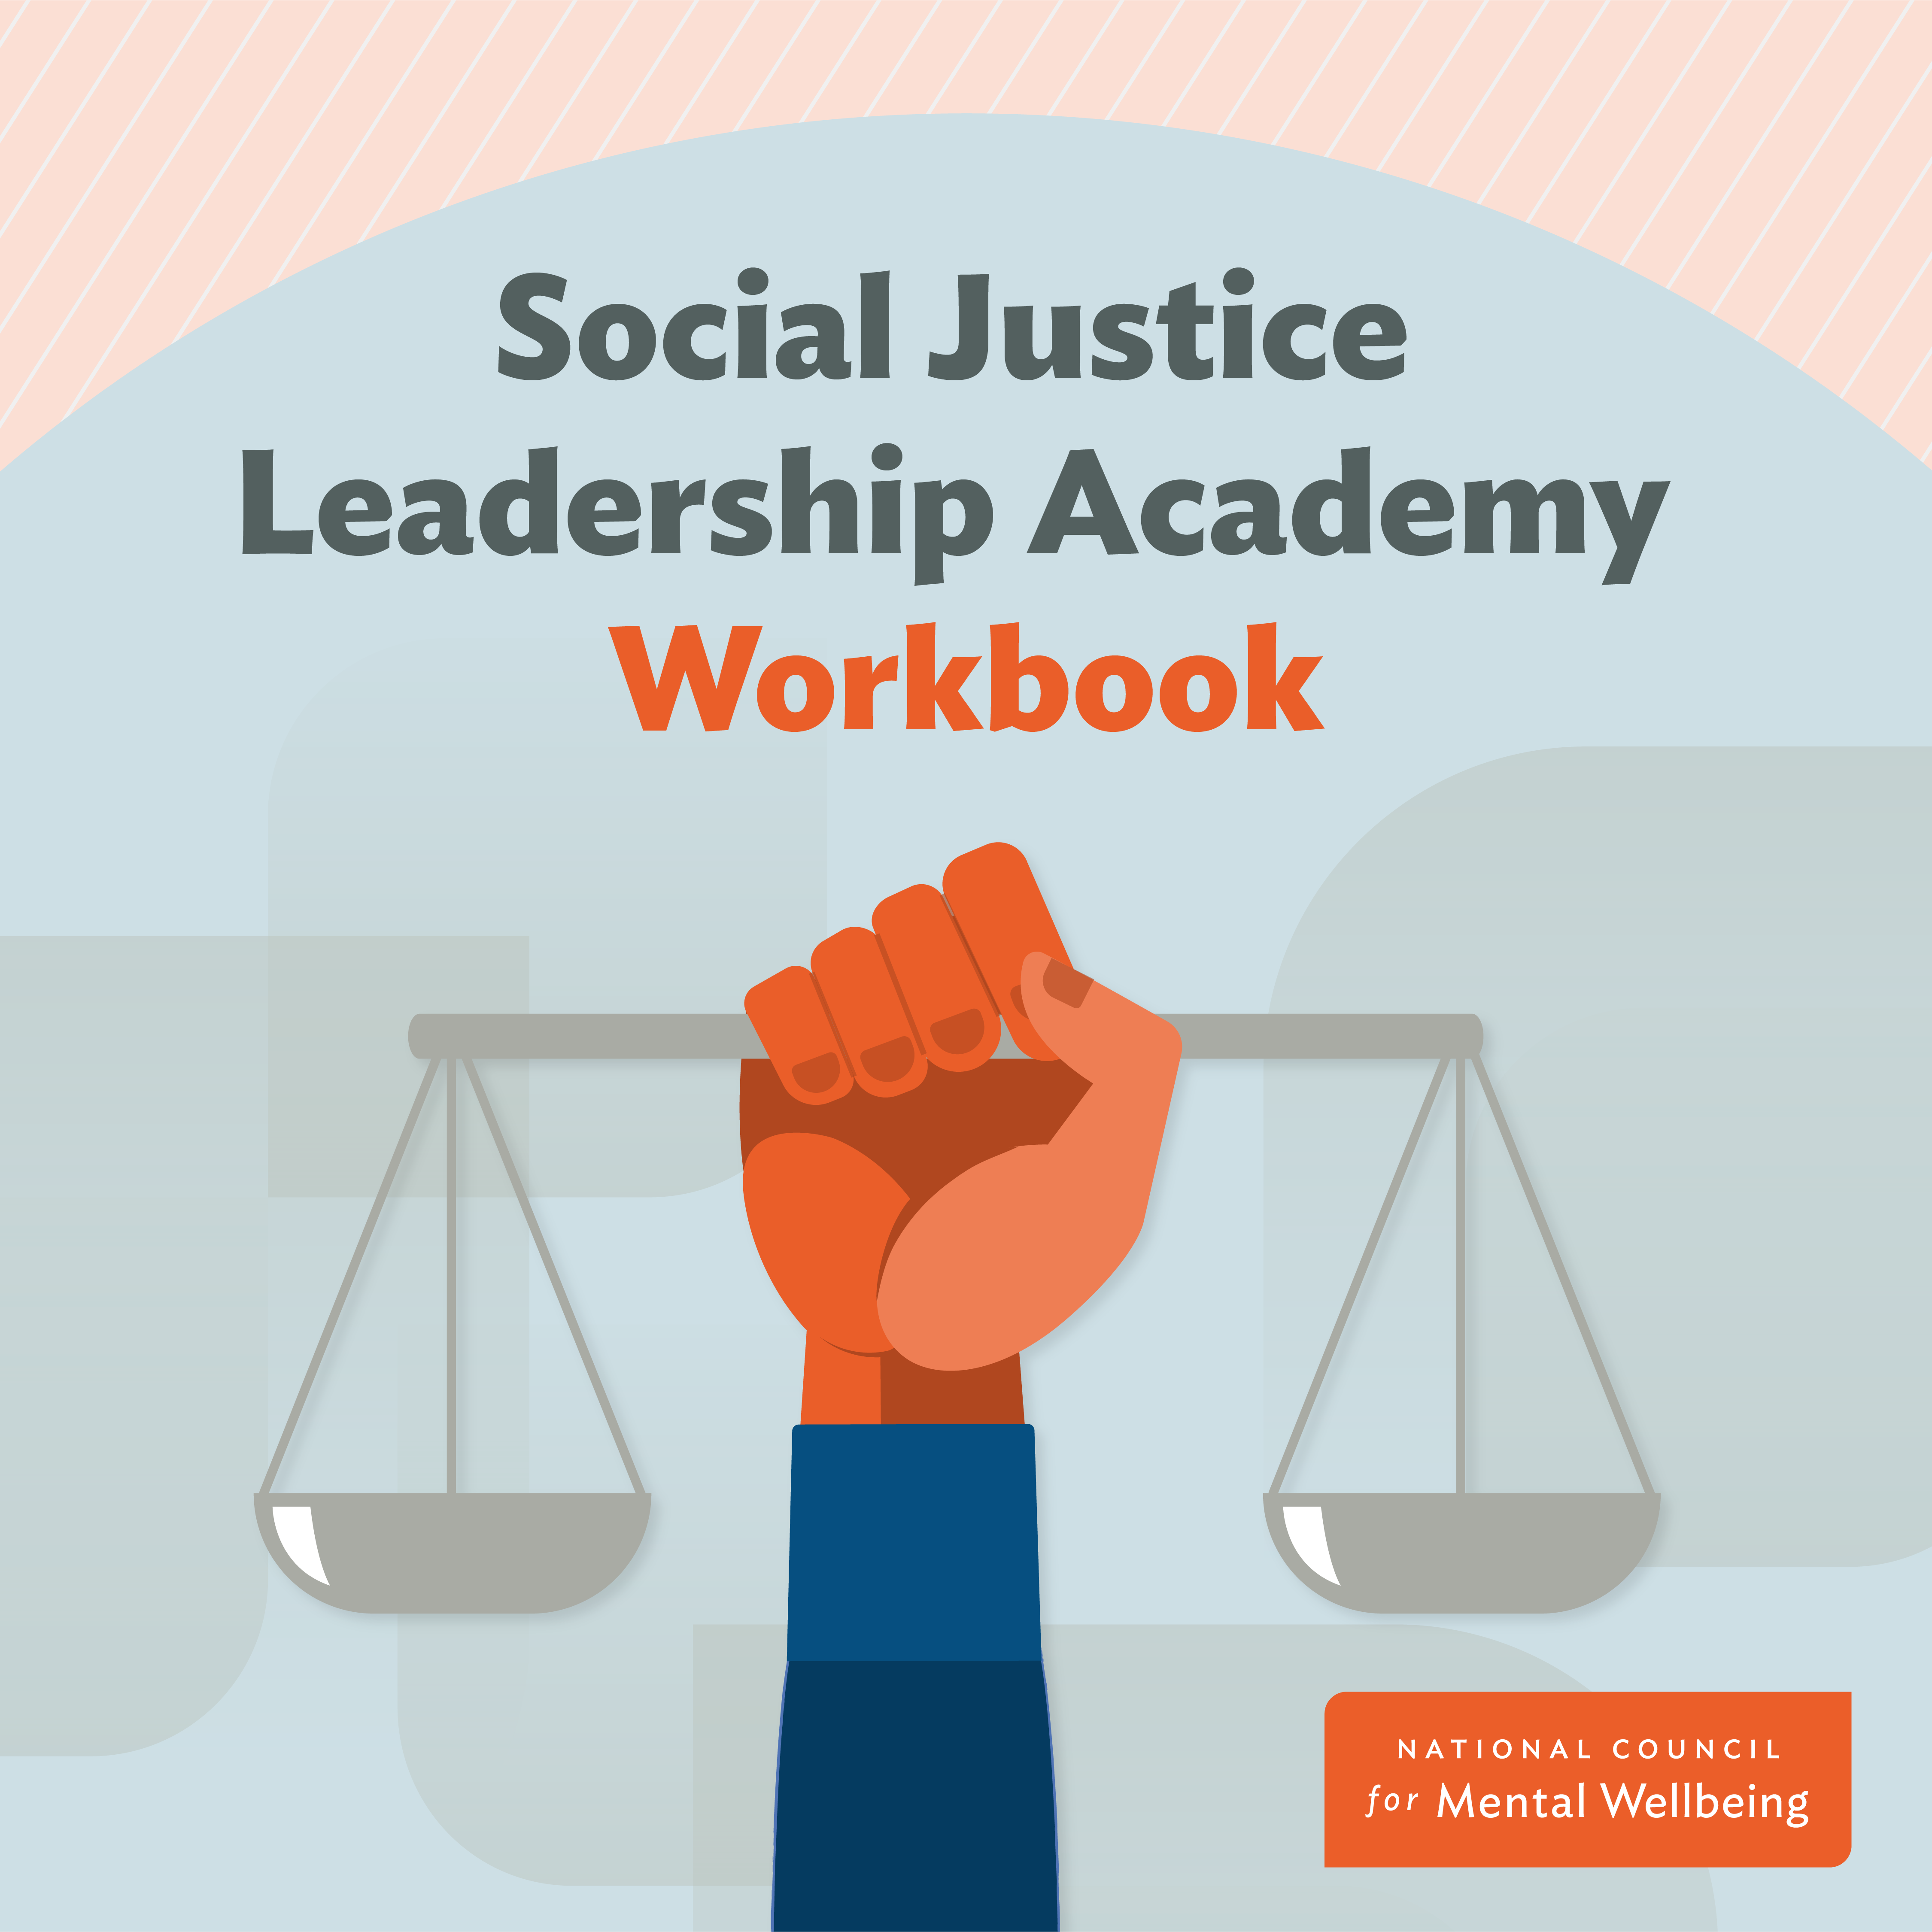 Social Justice Leadership Academy Workbook